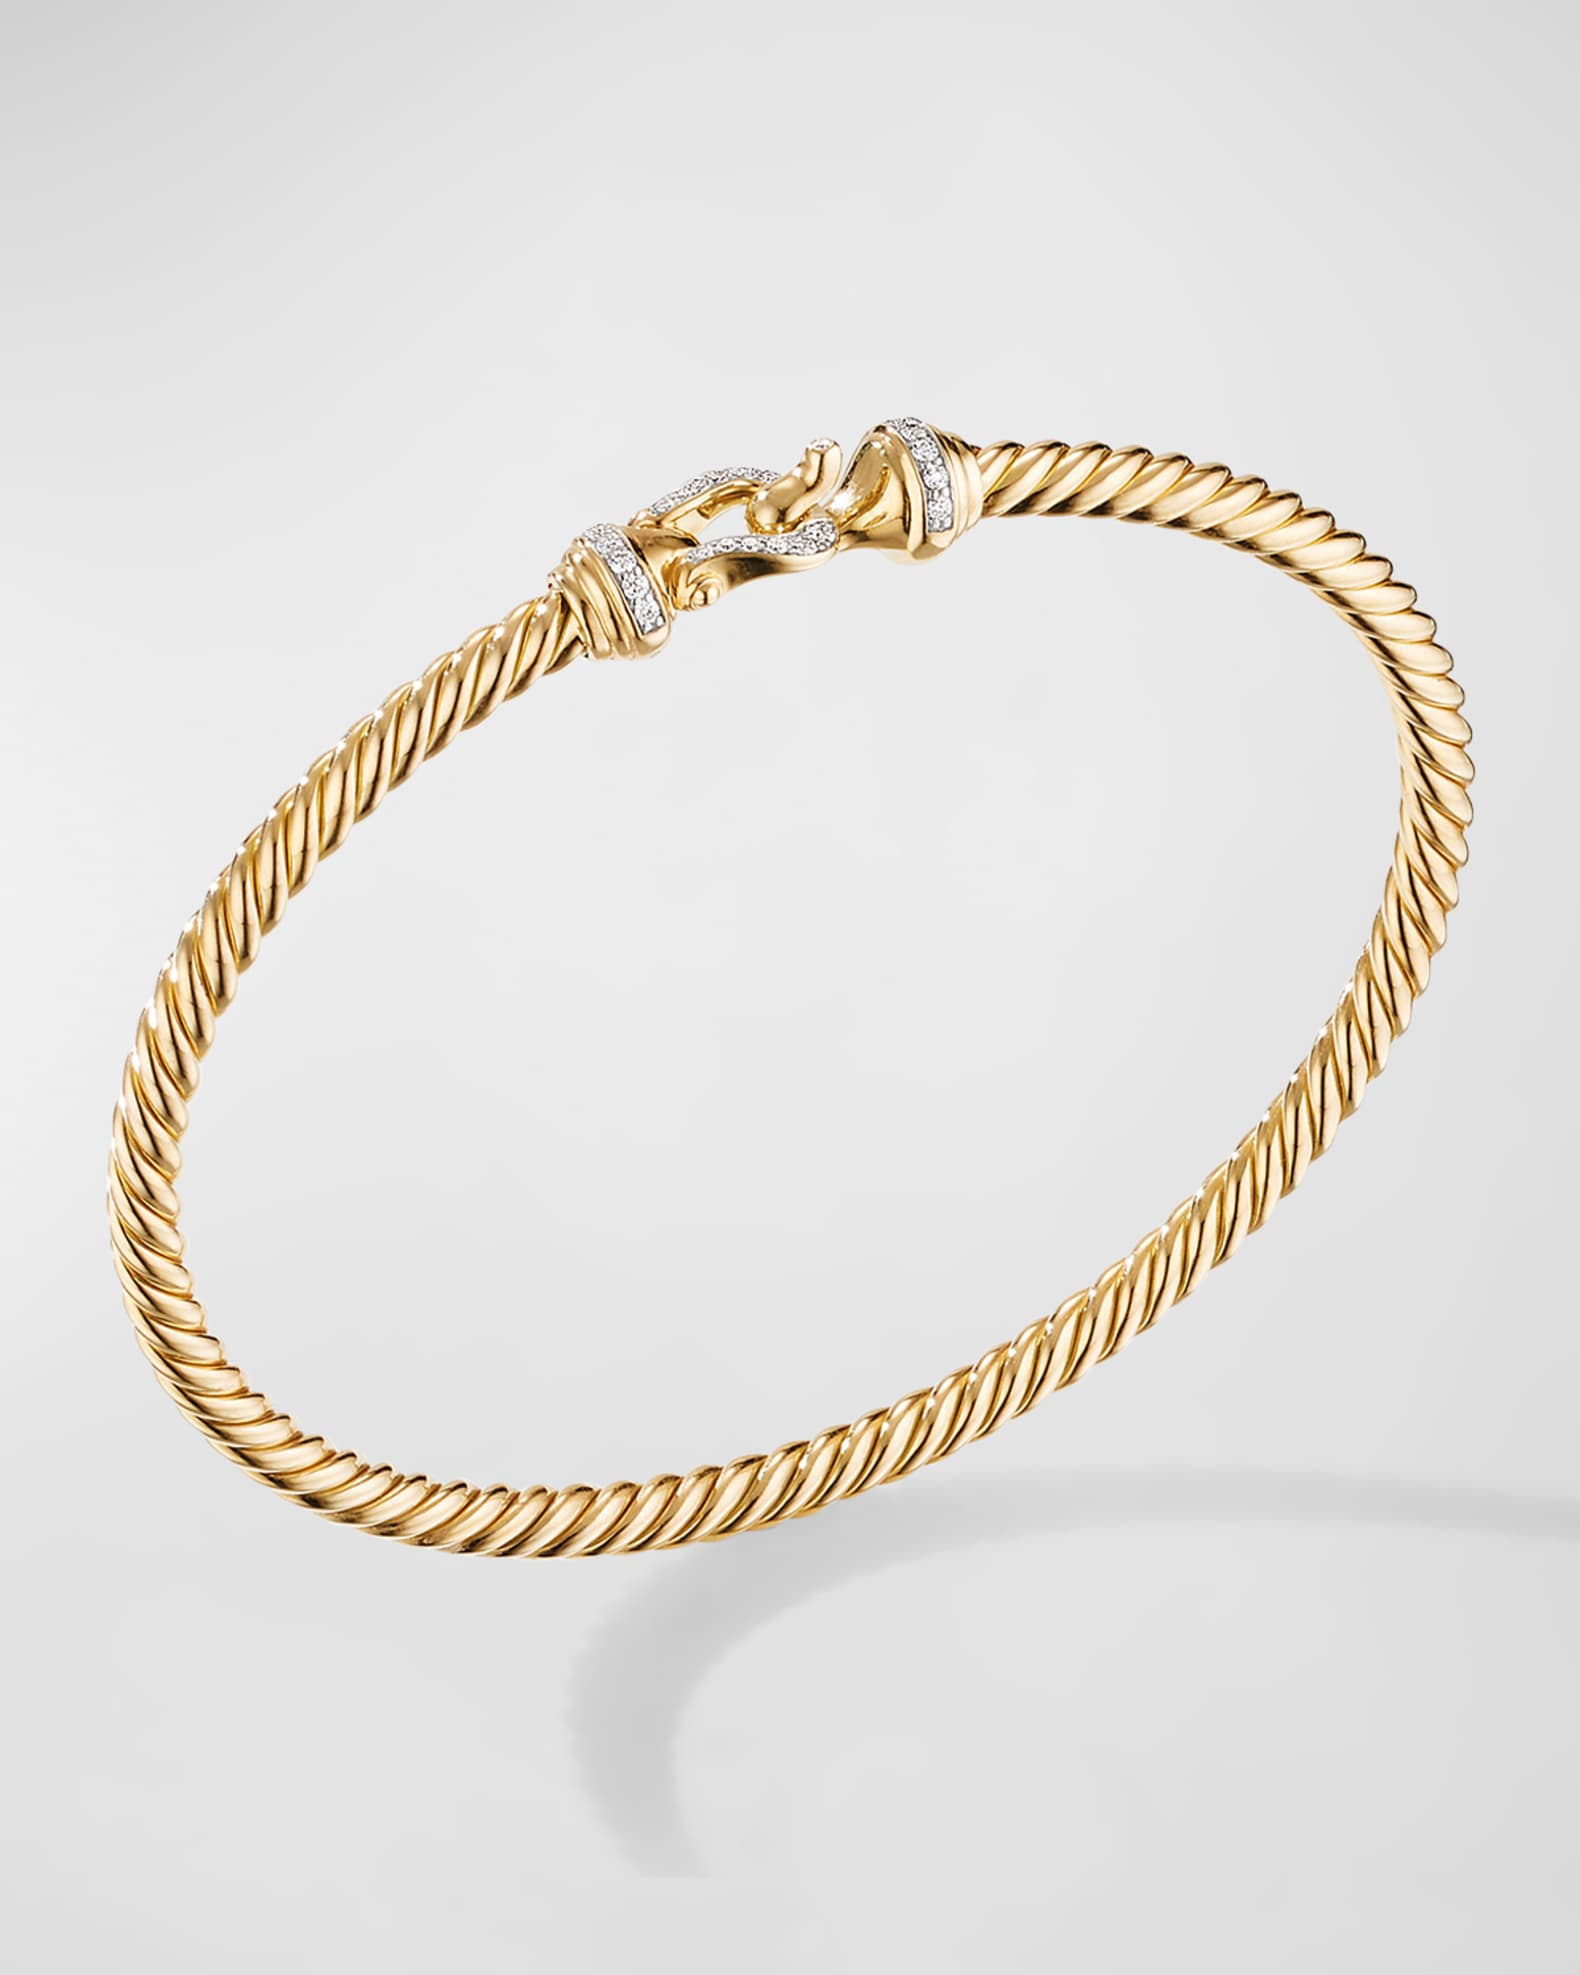 David Yurman Buckle Bracelet with Diamonds in 18K Gold, 3.5mm | Neiman ...